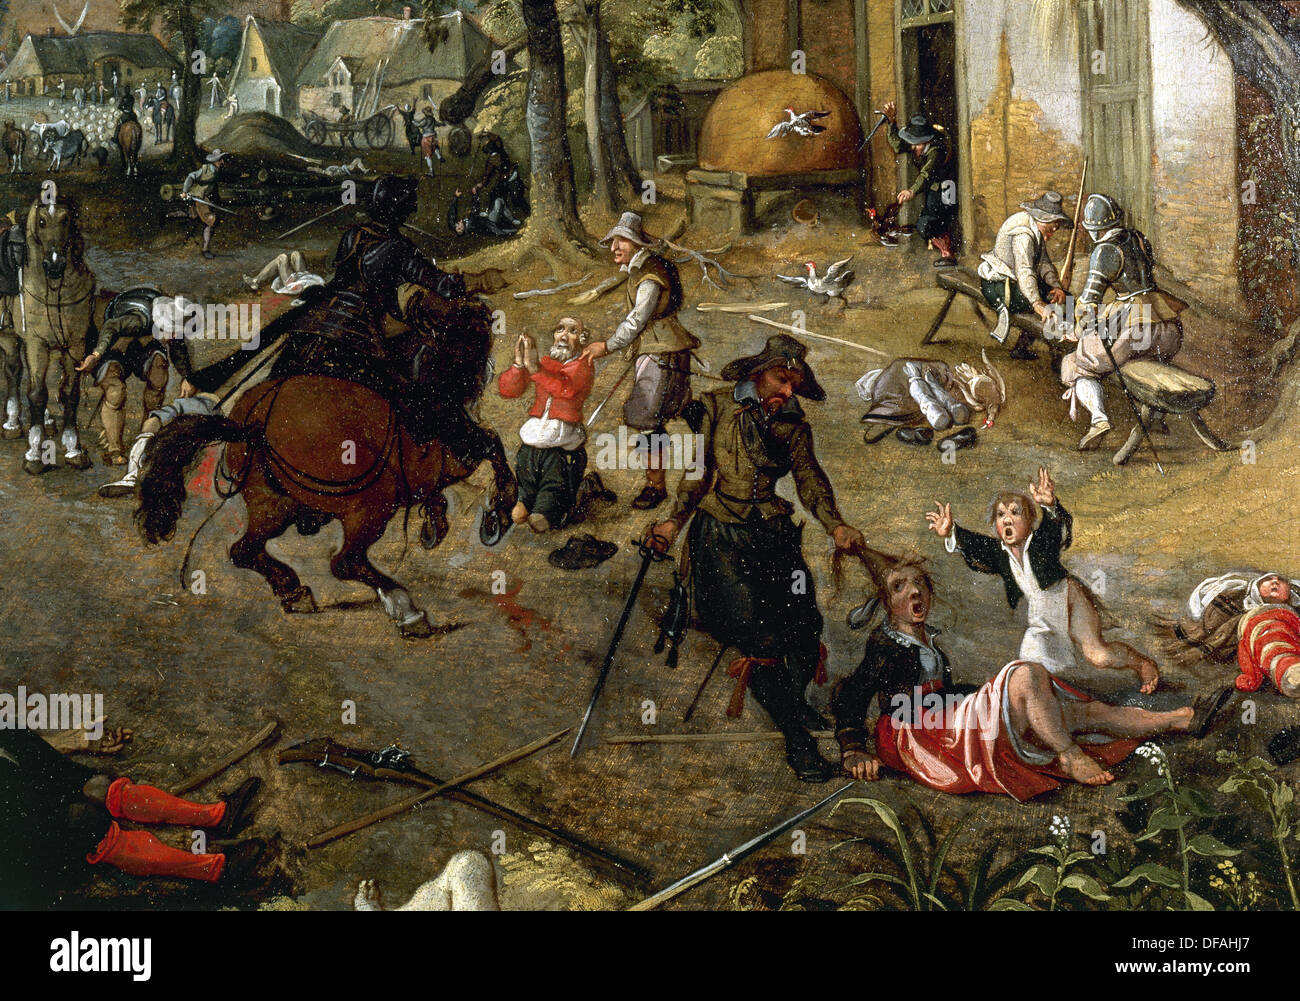 sebastian-vrancx-1573-1647-flemish-baroque-painter-pillaging-a-village-DFAHJ7.jpg